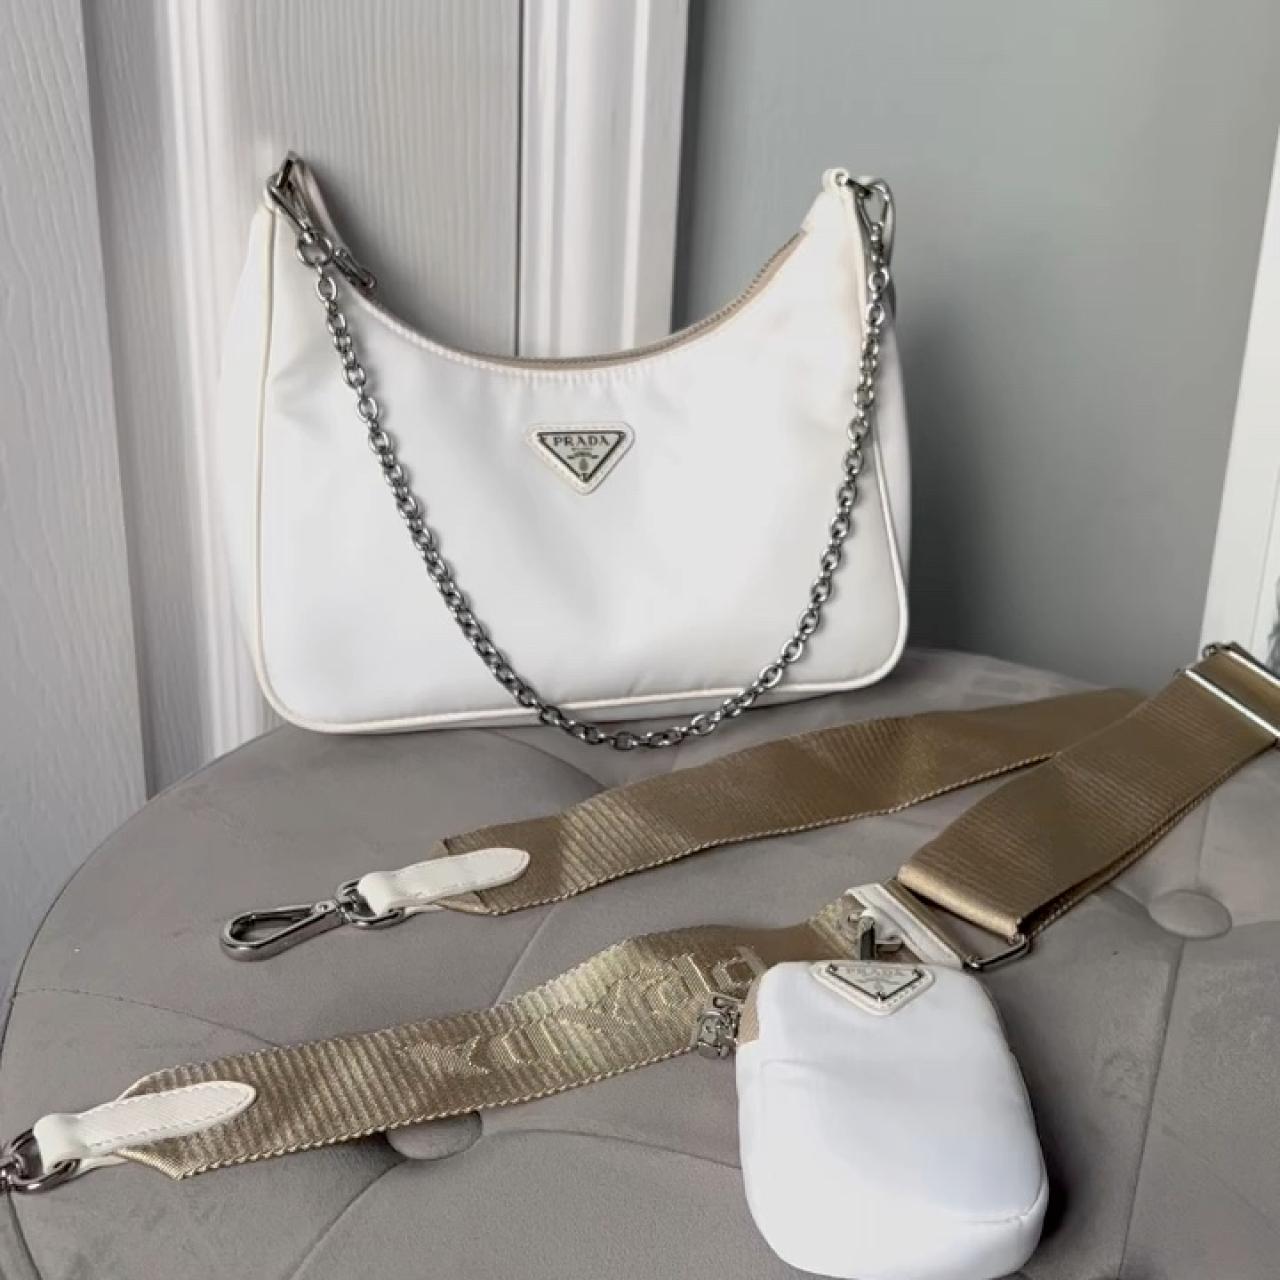 Prada white bag, comes with strap and mini bag - Depop